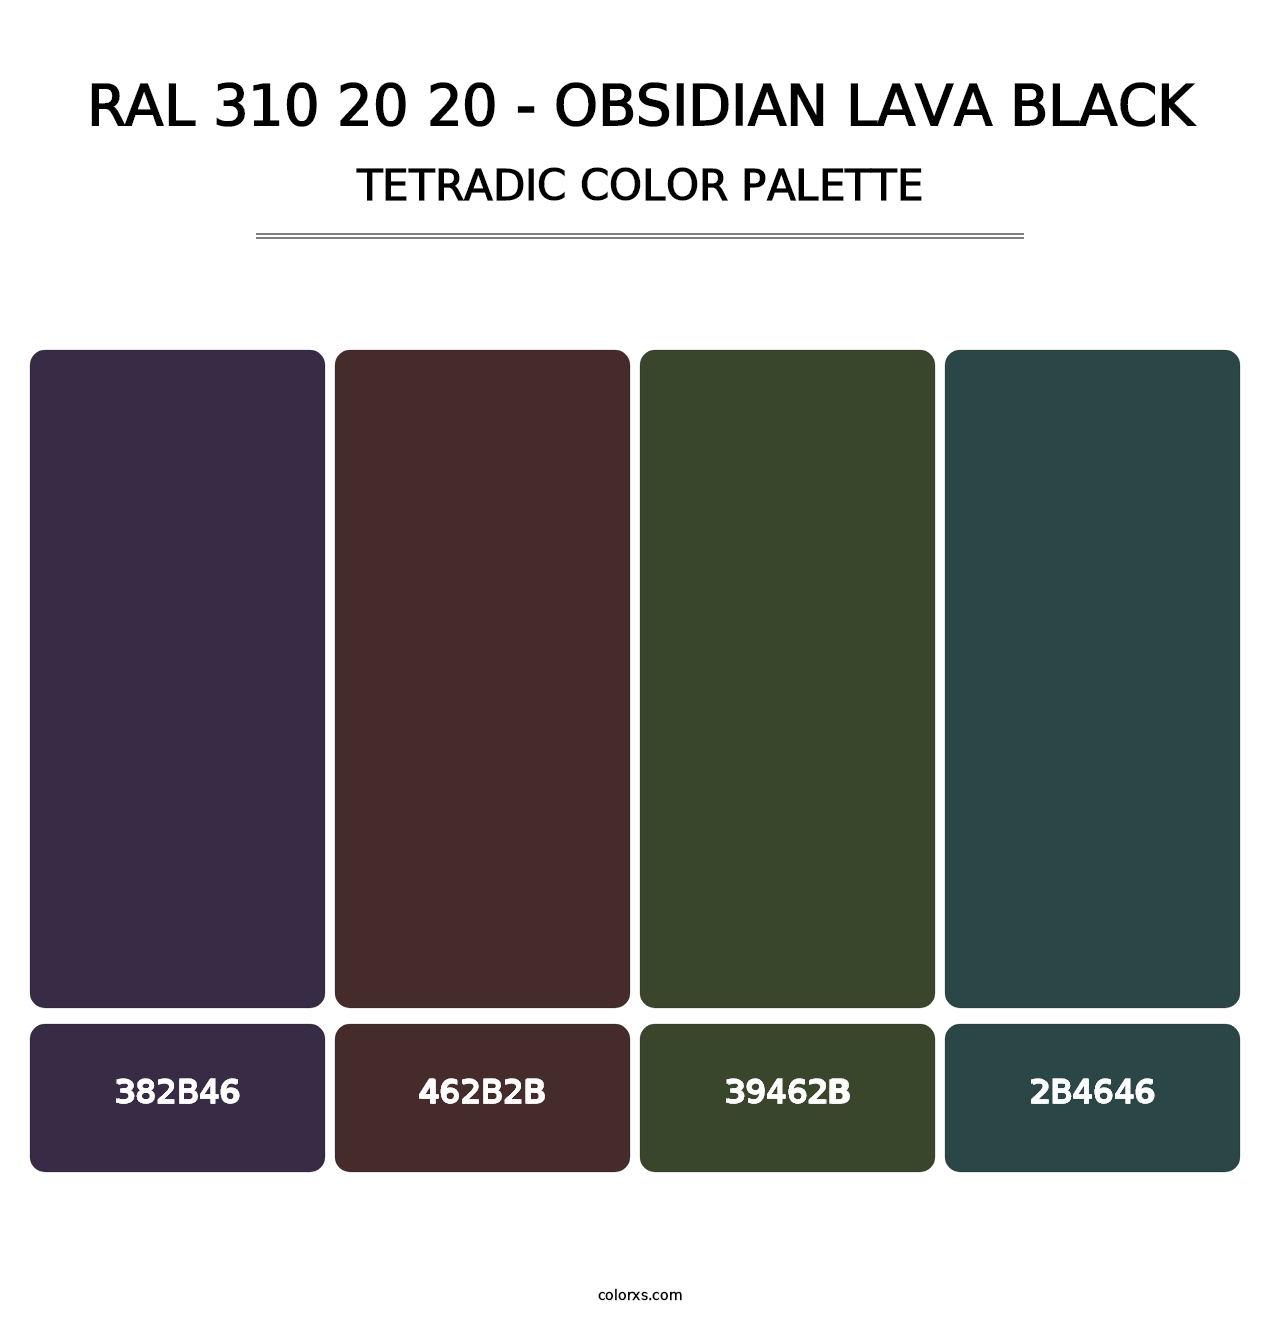 RAL 310 20 20 - Obsidian Lava Black - Tetradic Color Palette